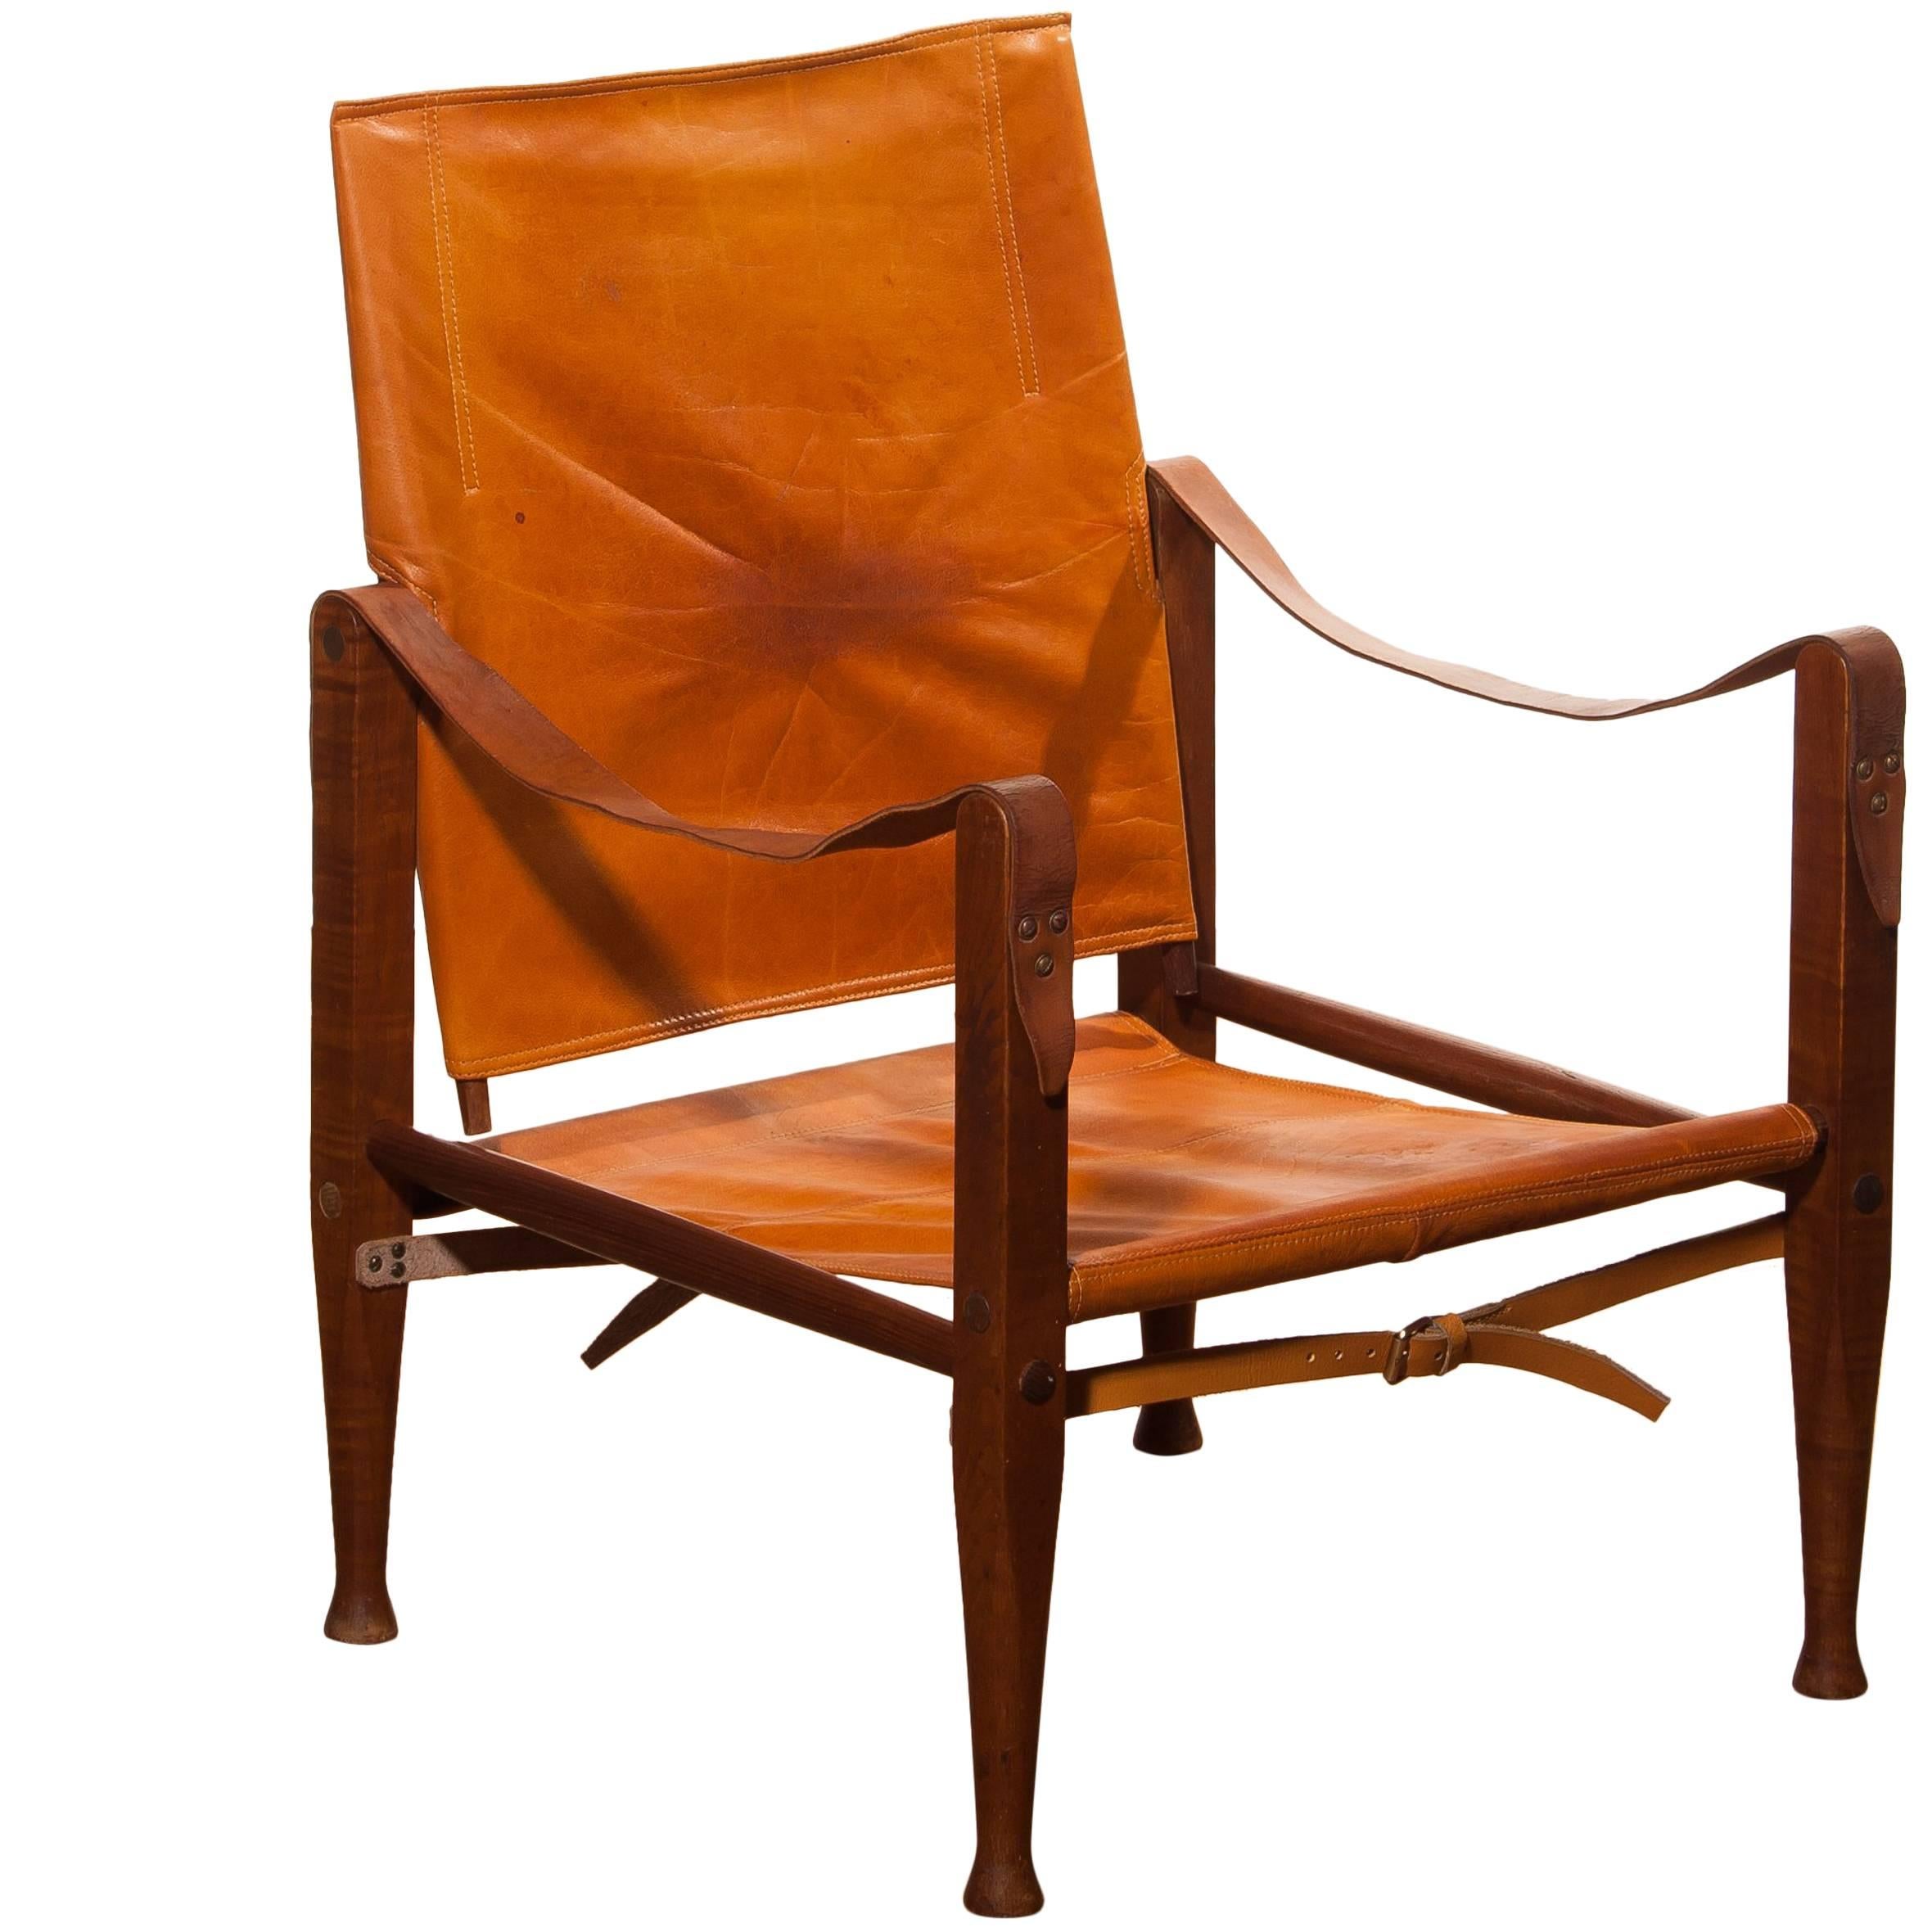 1930s, Kaare Klint Safari Chair for Rud, Rasmussen